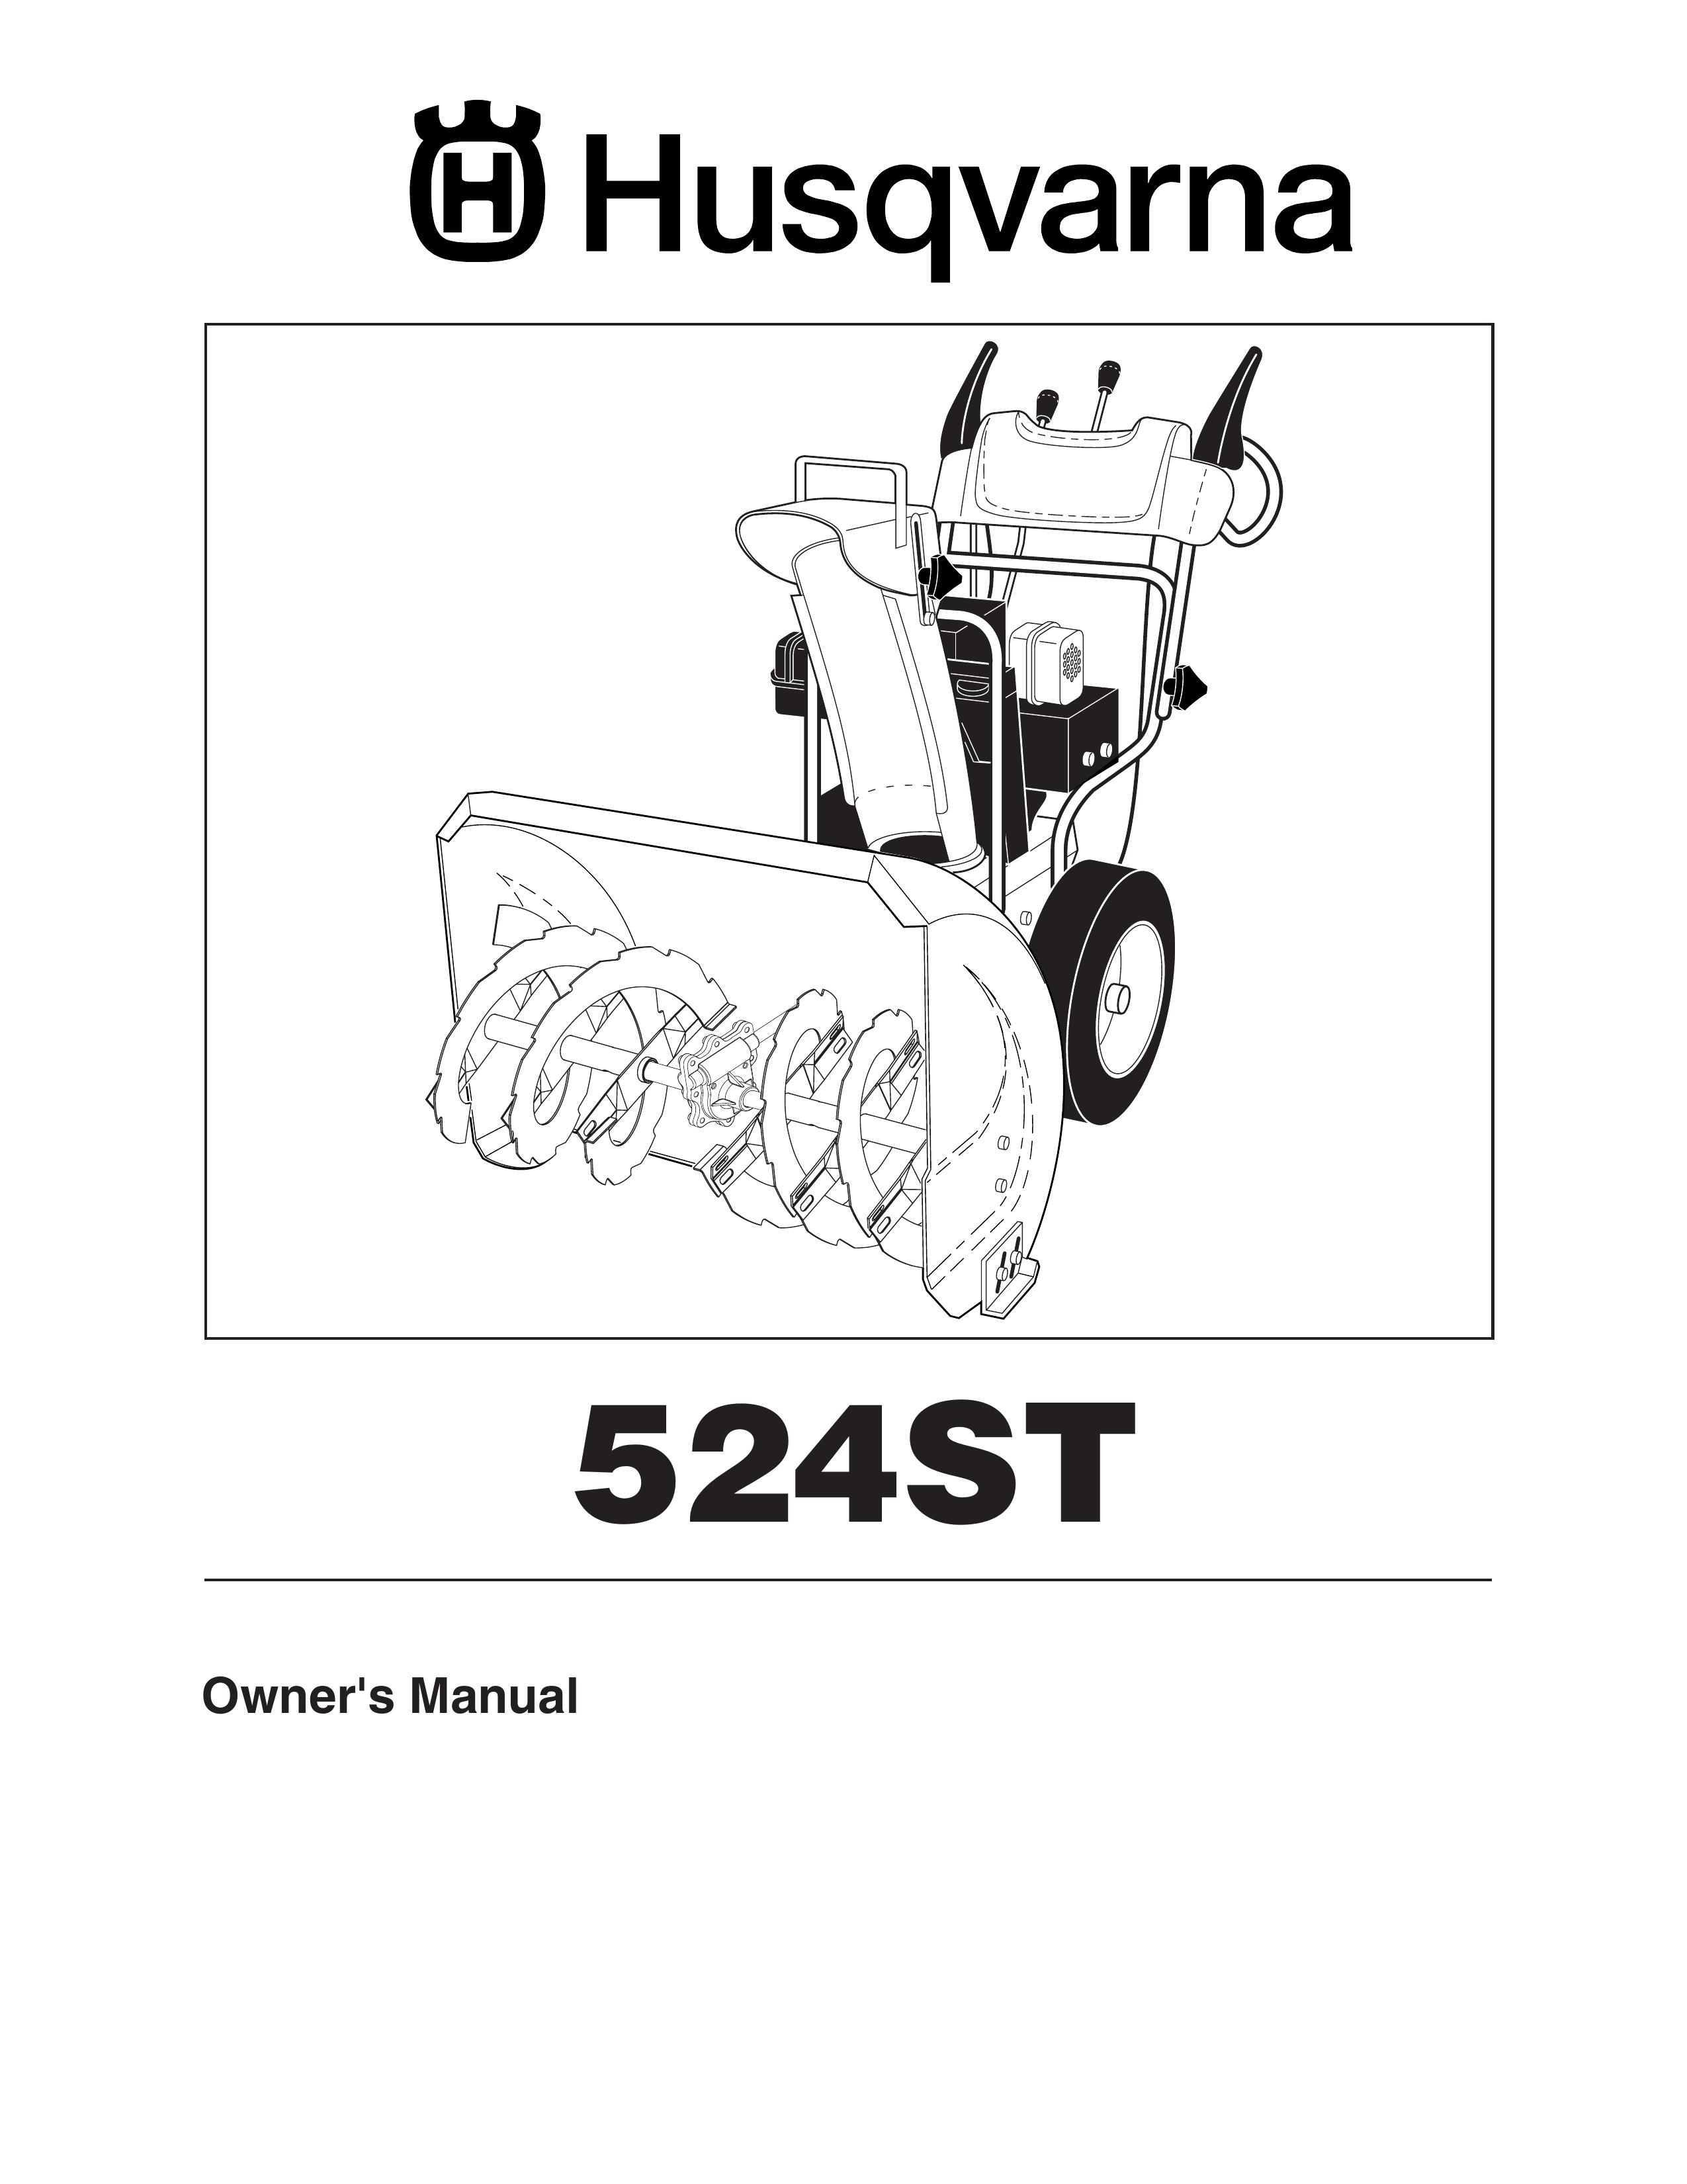 Husqvarna 524ST Snow Blower User Manual